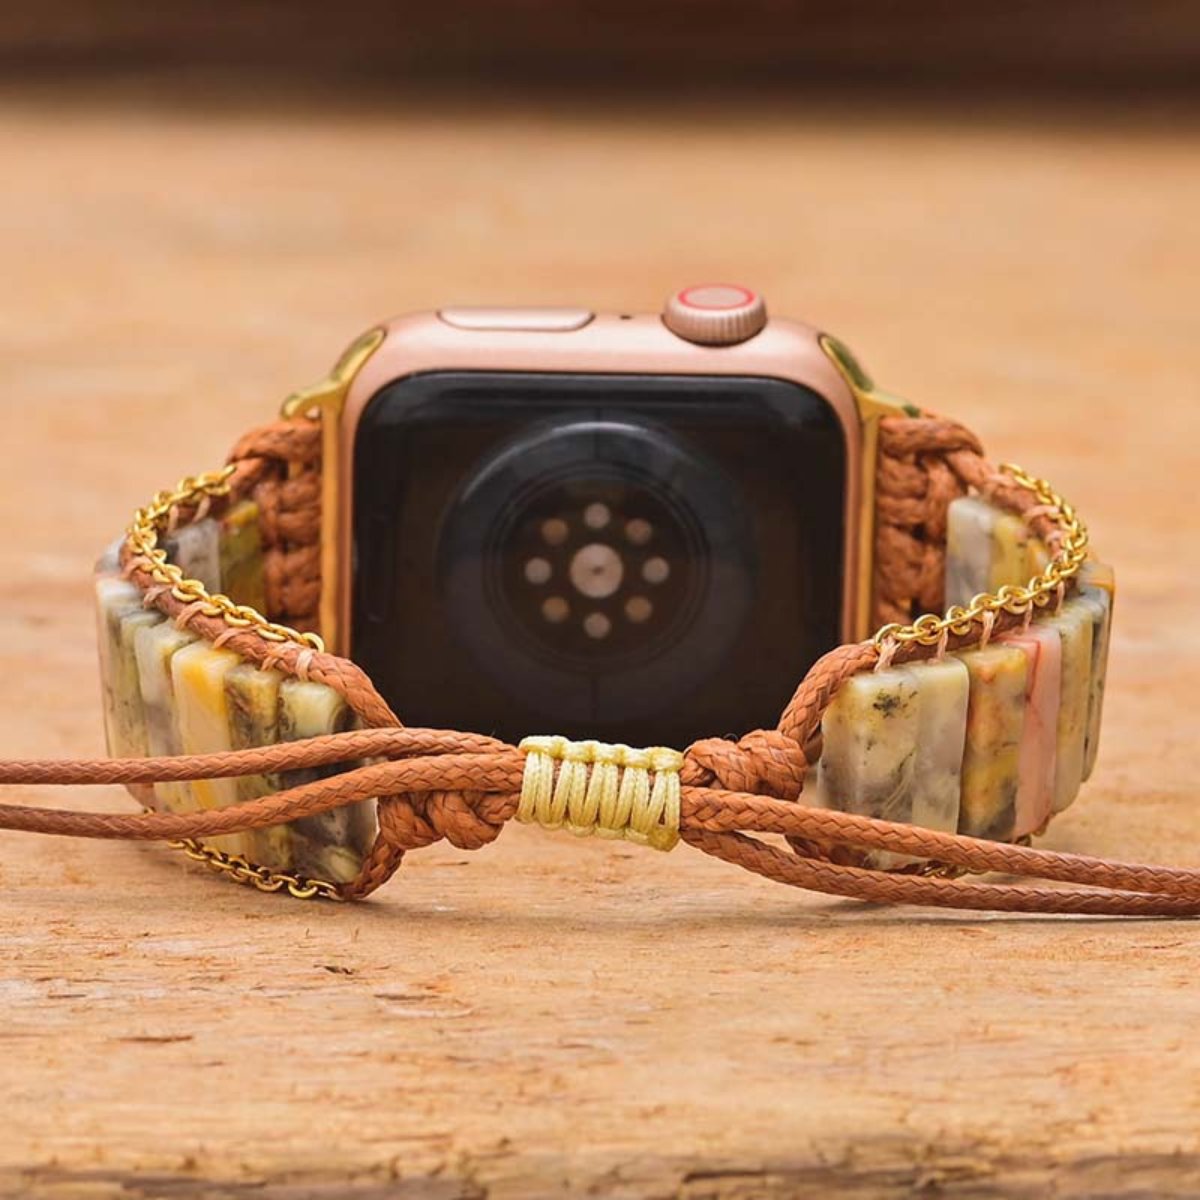 Ethnic Shape Agate Apple Watch Strap - Apple Watch Straps - Pretland | Spiritual Crystals & Jewelry